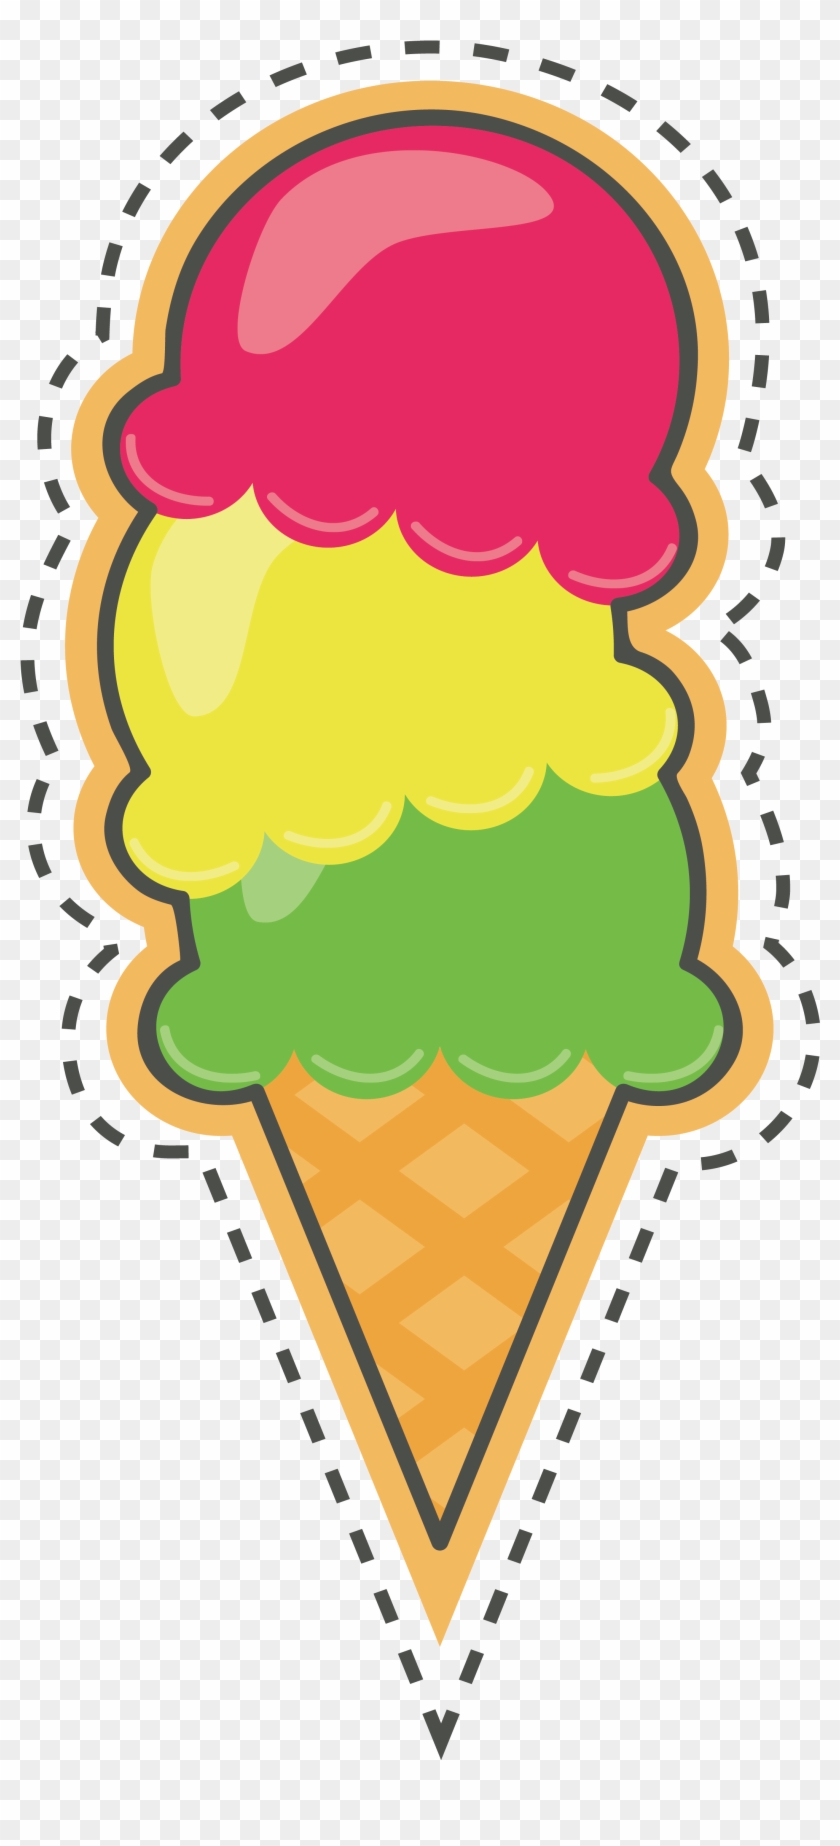 Ice Cream Sticker - Ice Cream Sticker Png #173552